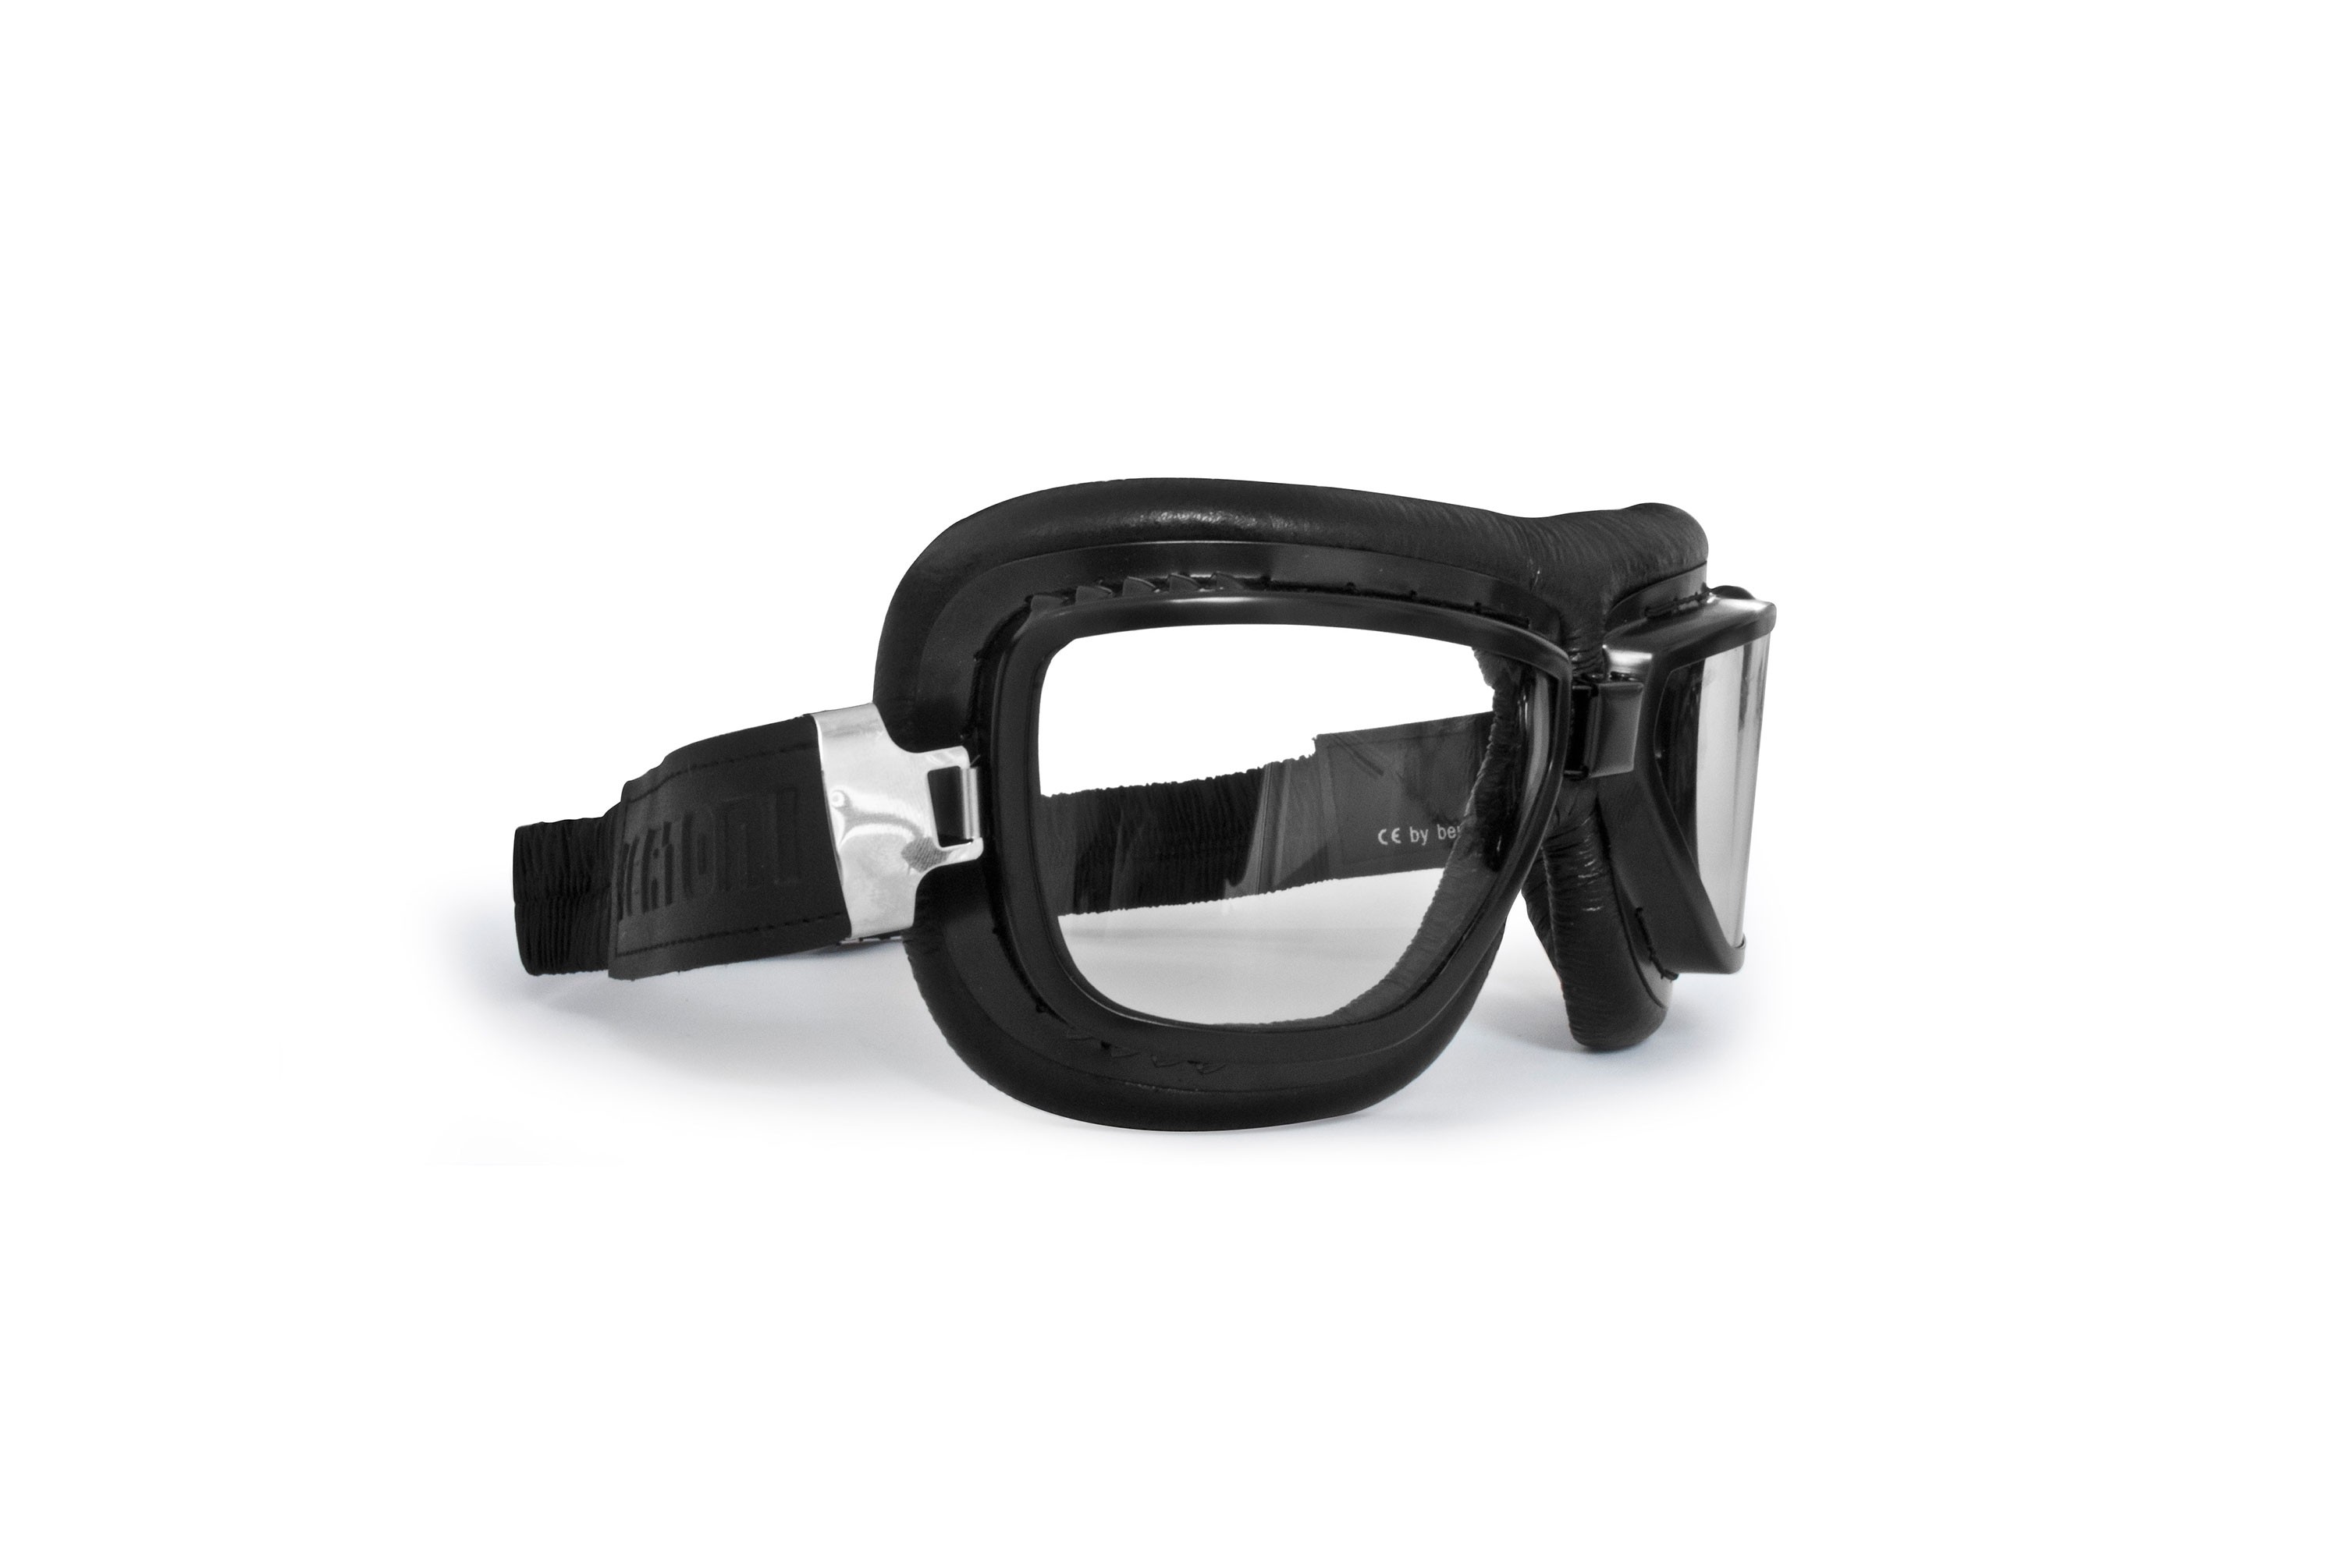 Motorcycle Vintage Goggles - Black Steel Profile - Antifog and Anticrash Lenses - Prescription Glasses Friendly - by Bertoni Italy - AF194A